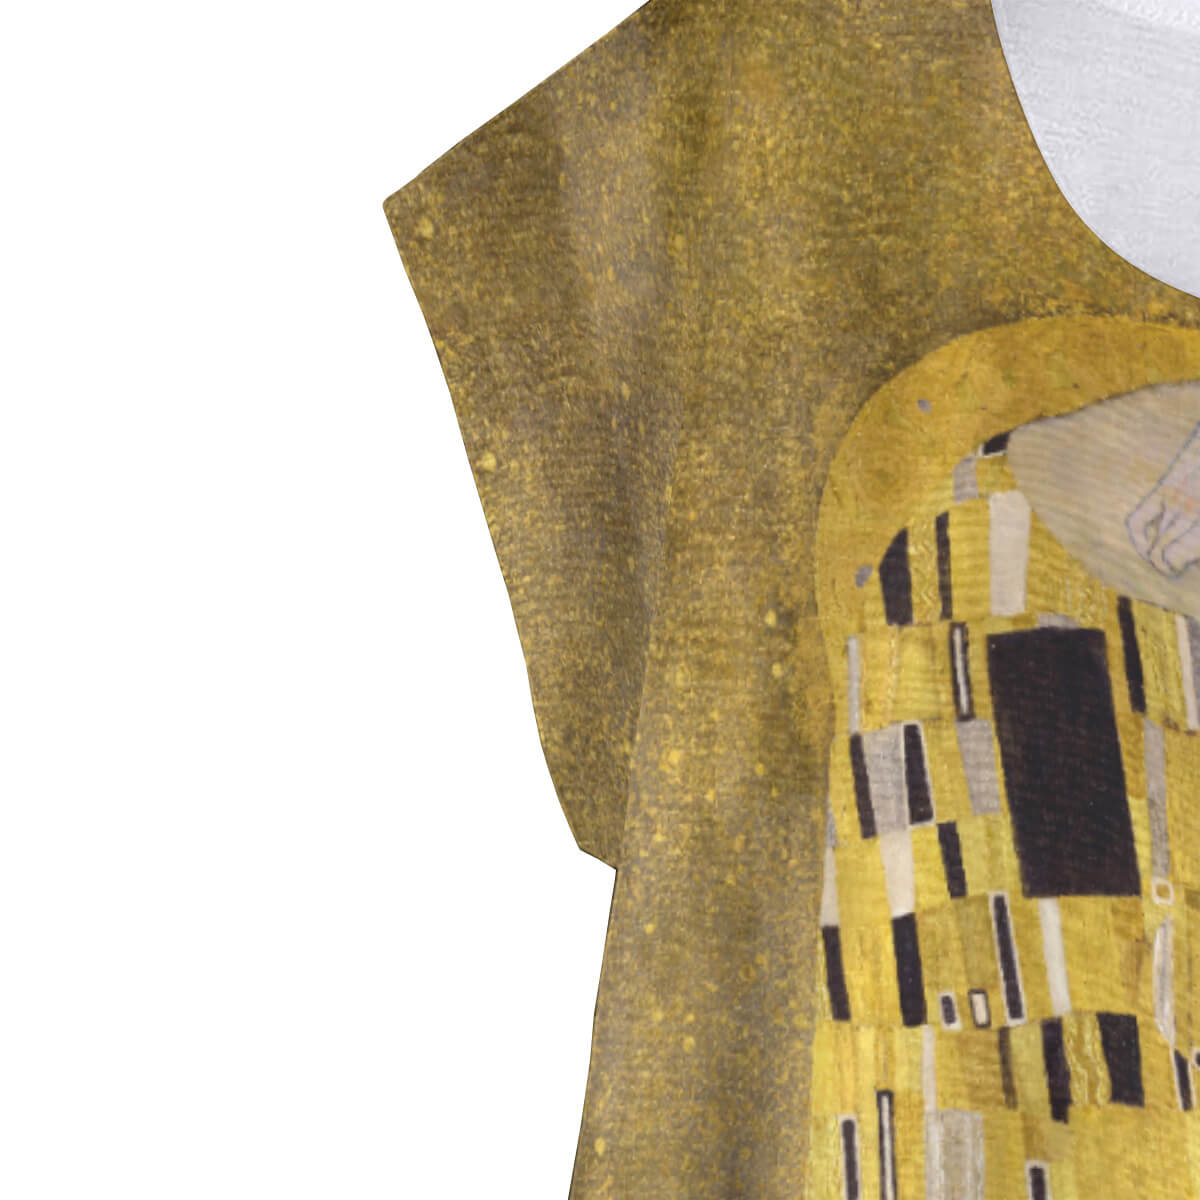 Camiseta curvada Gustav Klimt O Beijo Tamanho grande